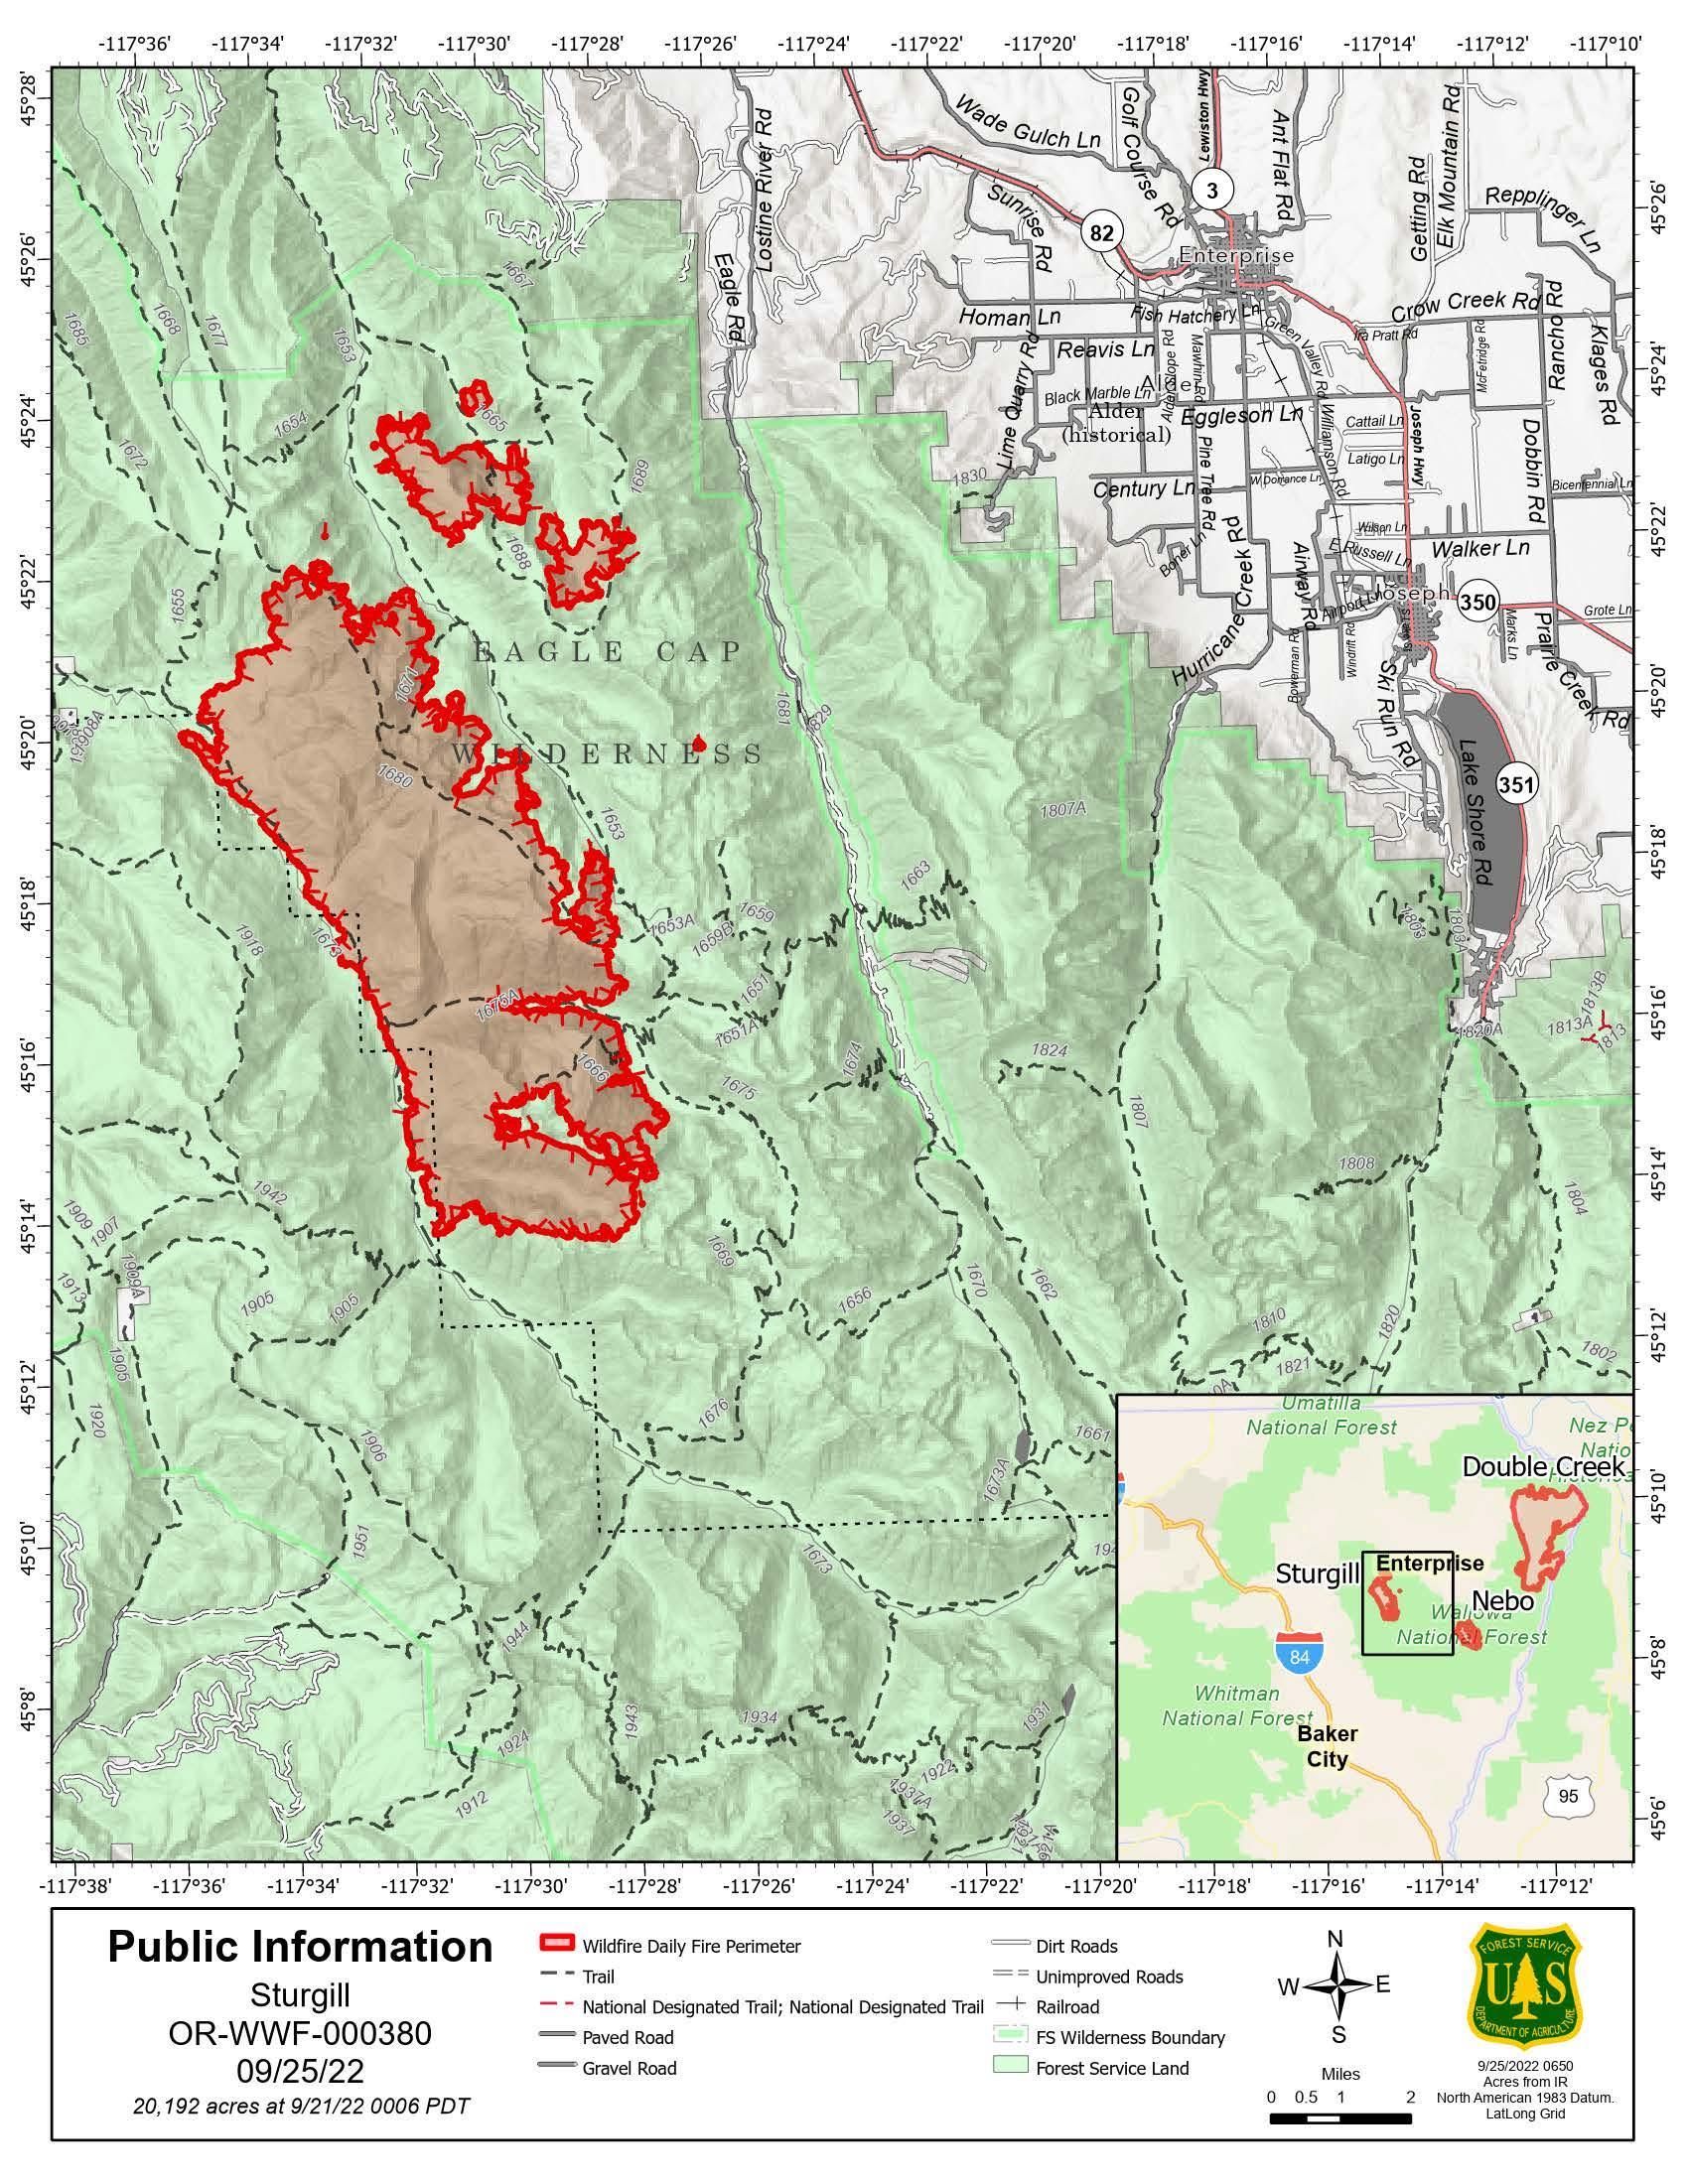 Sturgill Fire Map - 09/25/2022